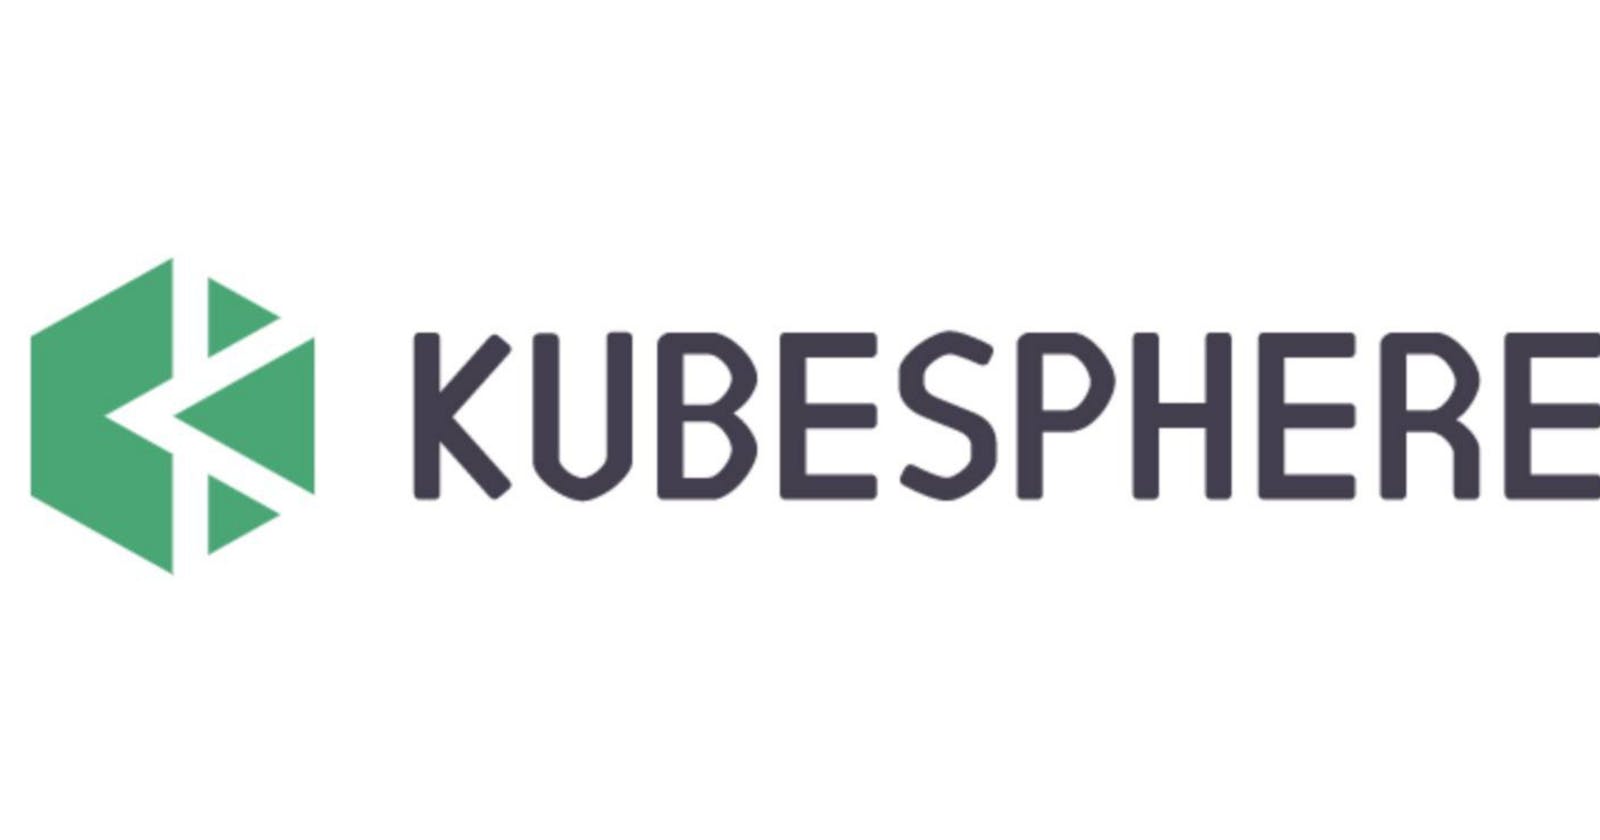 KubeSphere:  A Full Stack Solutions & Management platform.